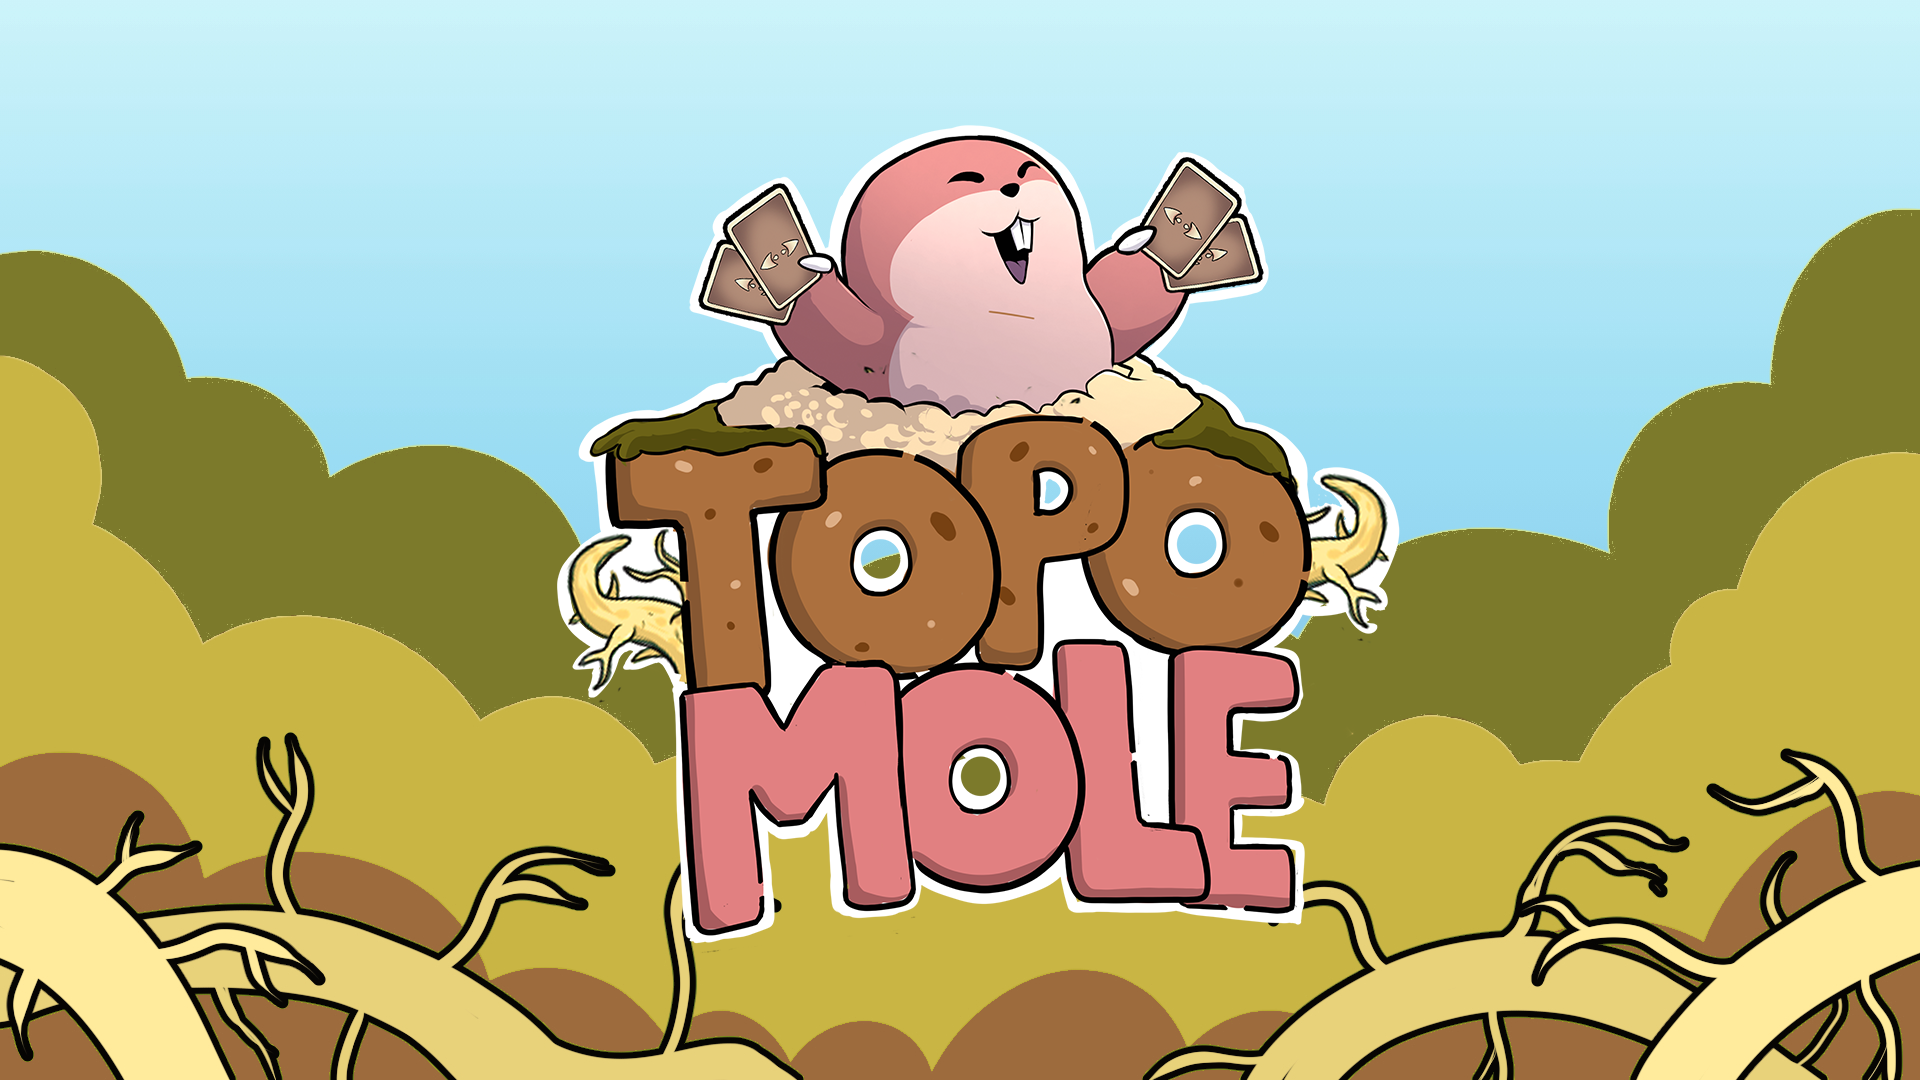 Topo Mole